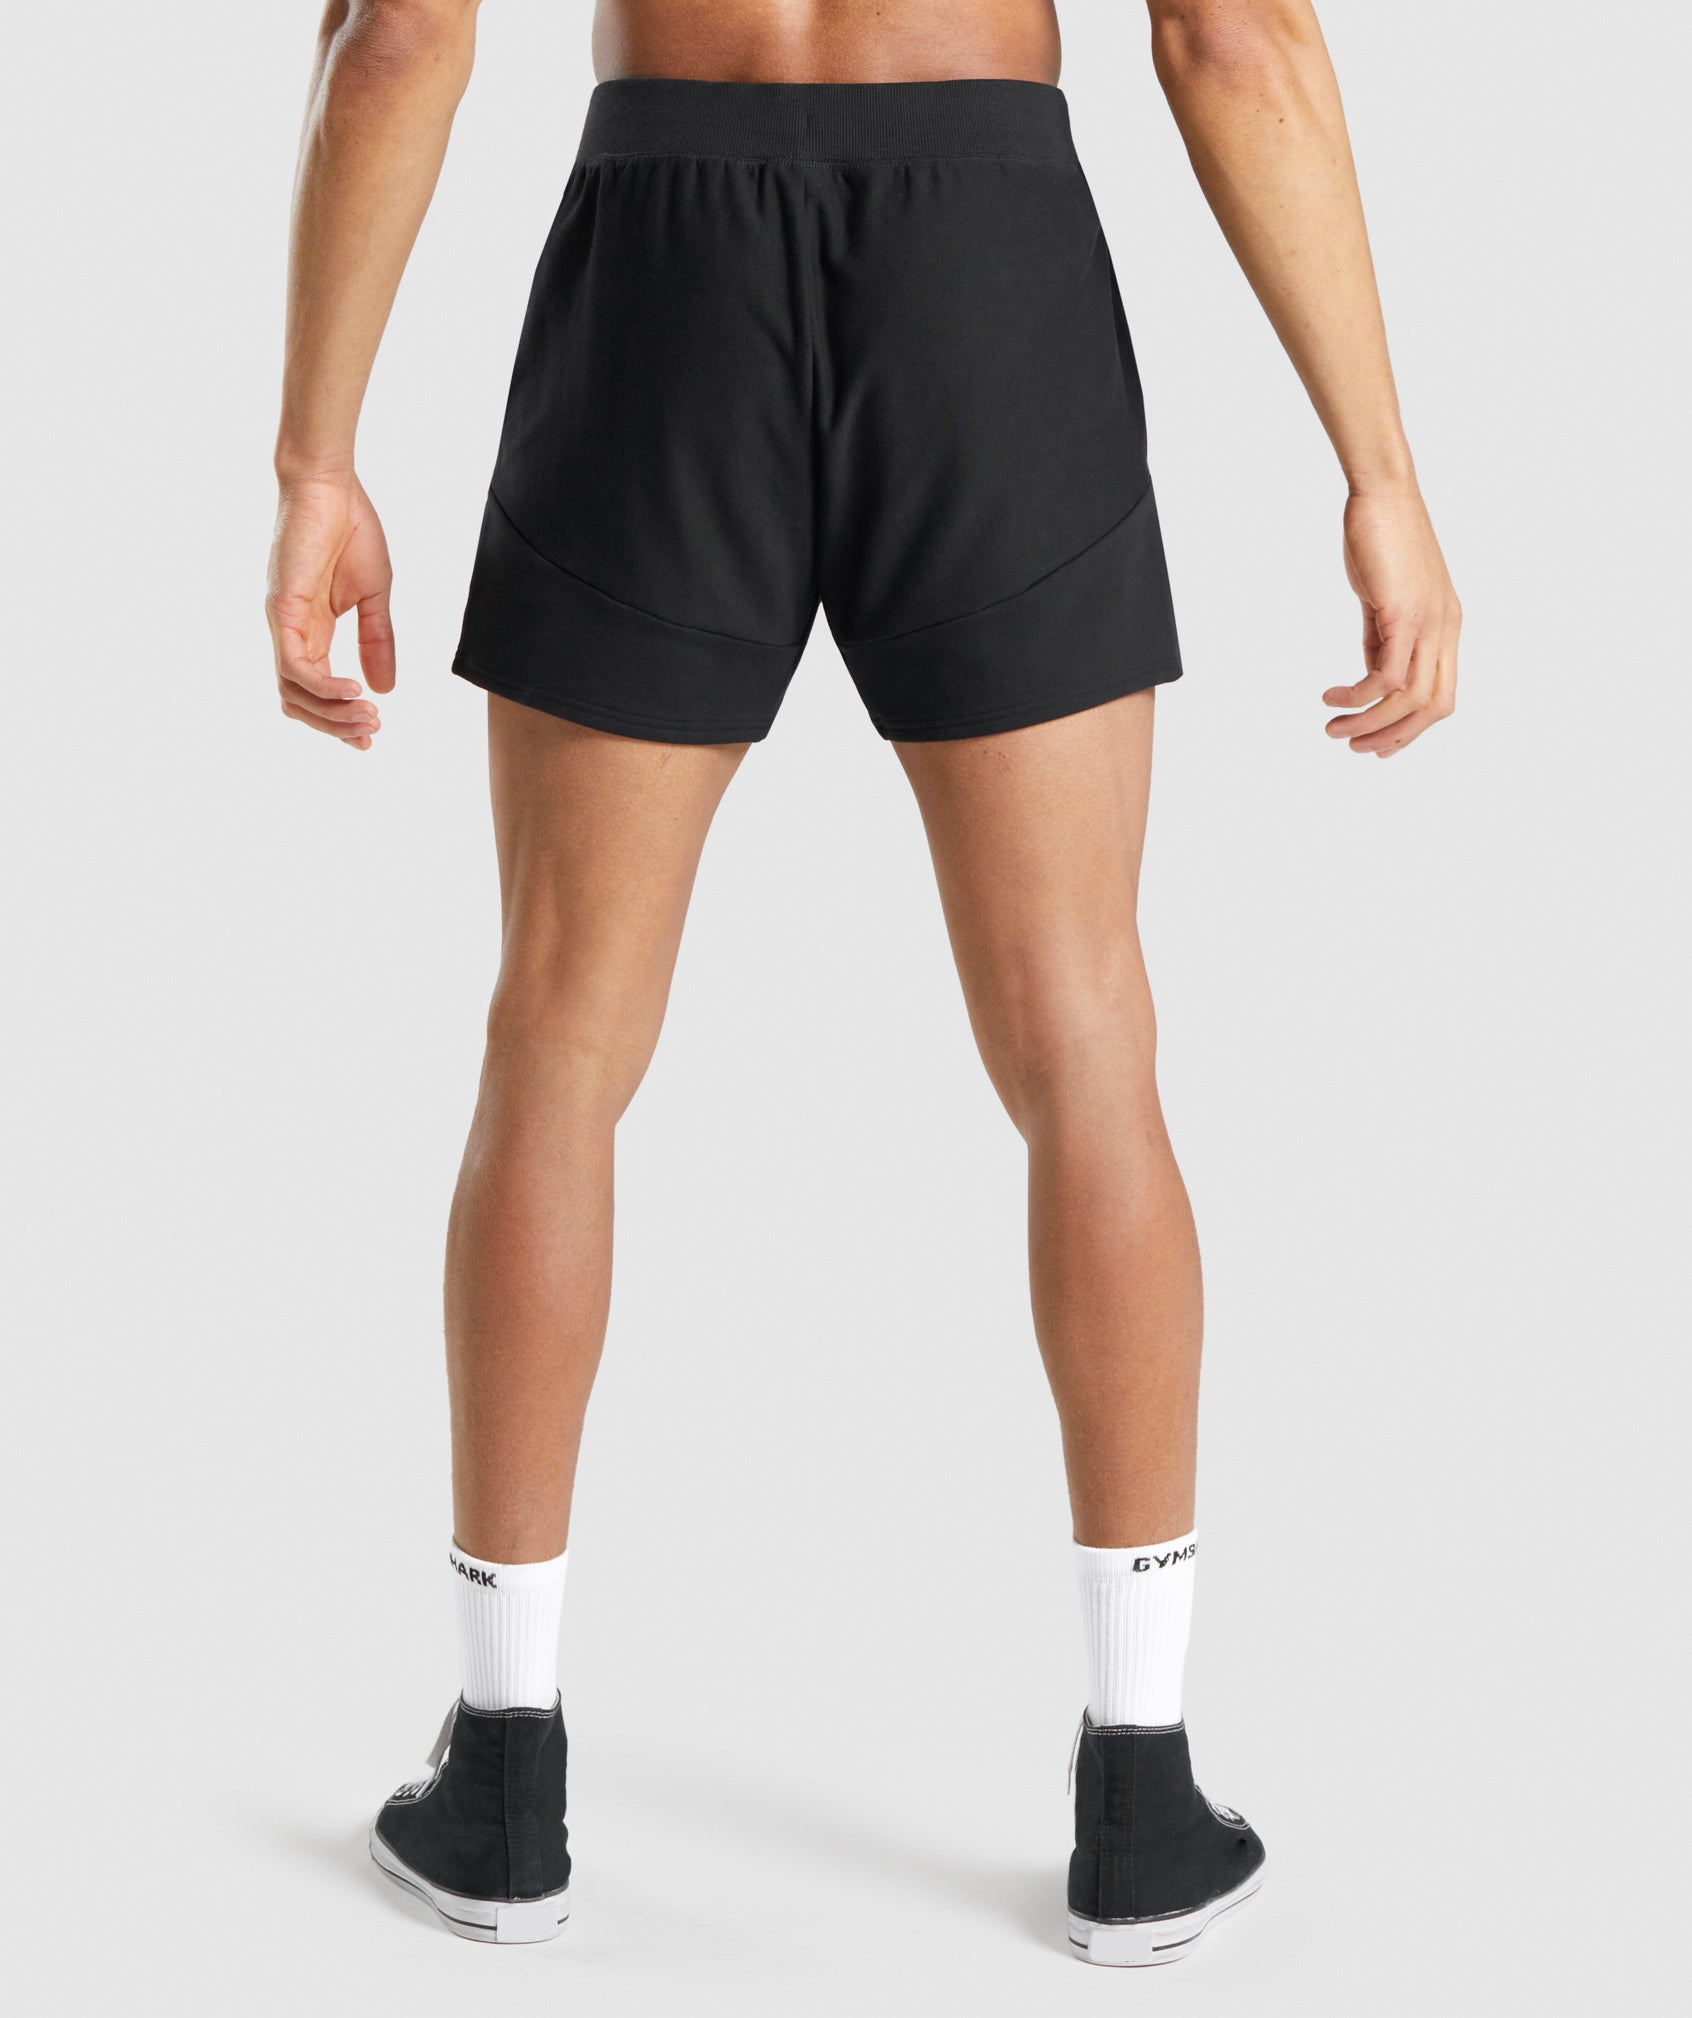 Chalk 5" Quad Shorts in Black - view 3